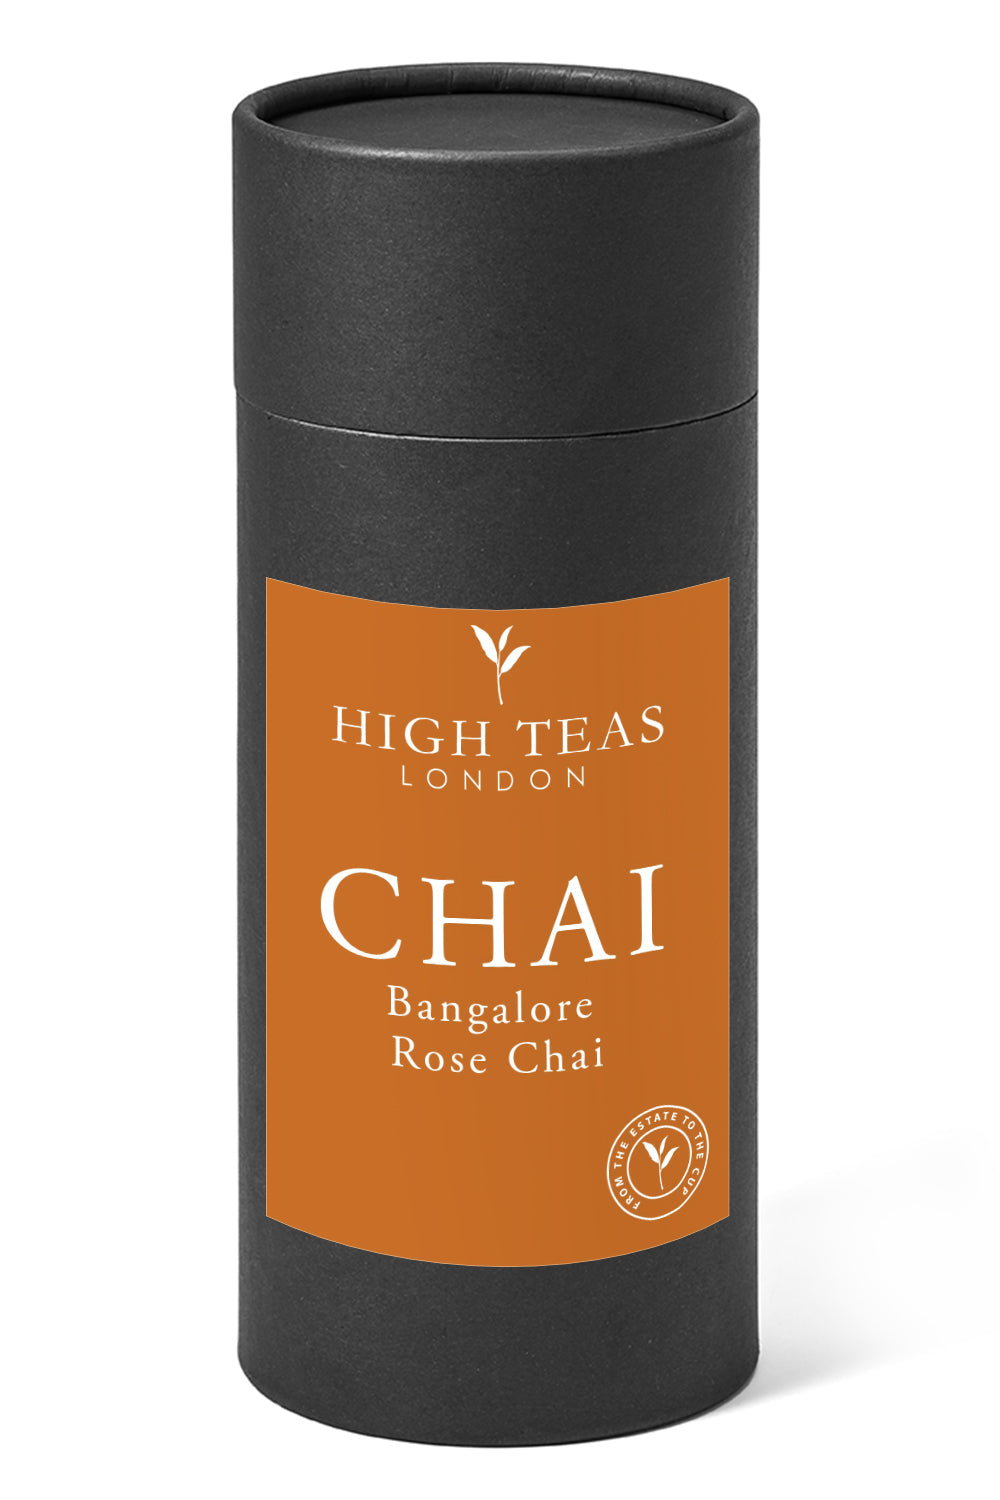 Bangalore Rose Chai-150g gift-Loose Leaf Tea-High Teas